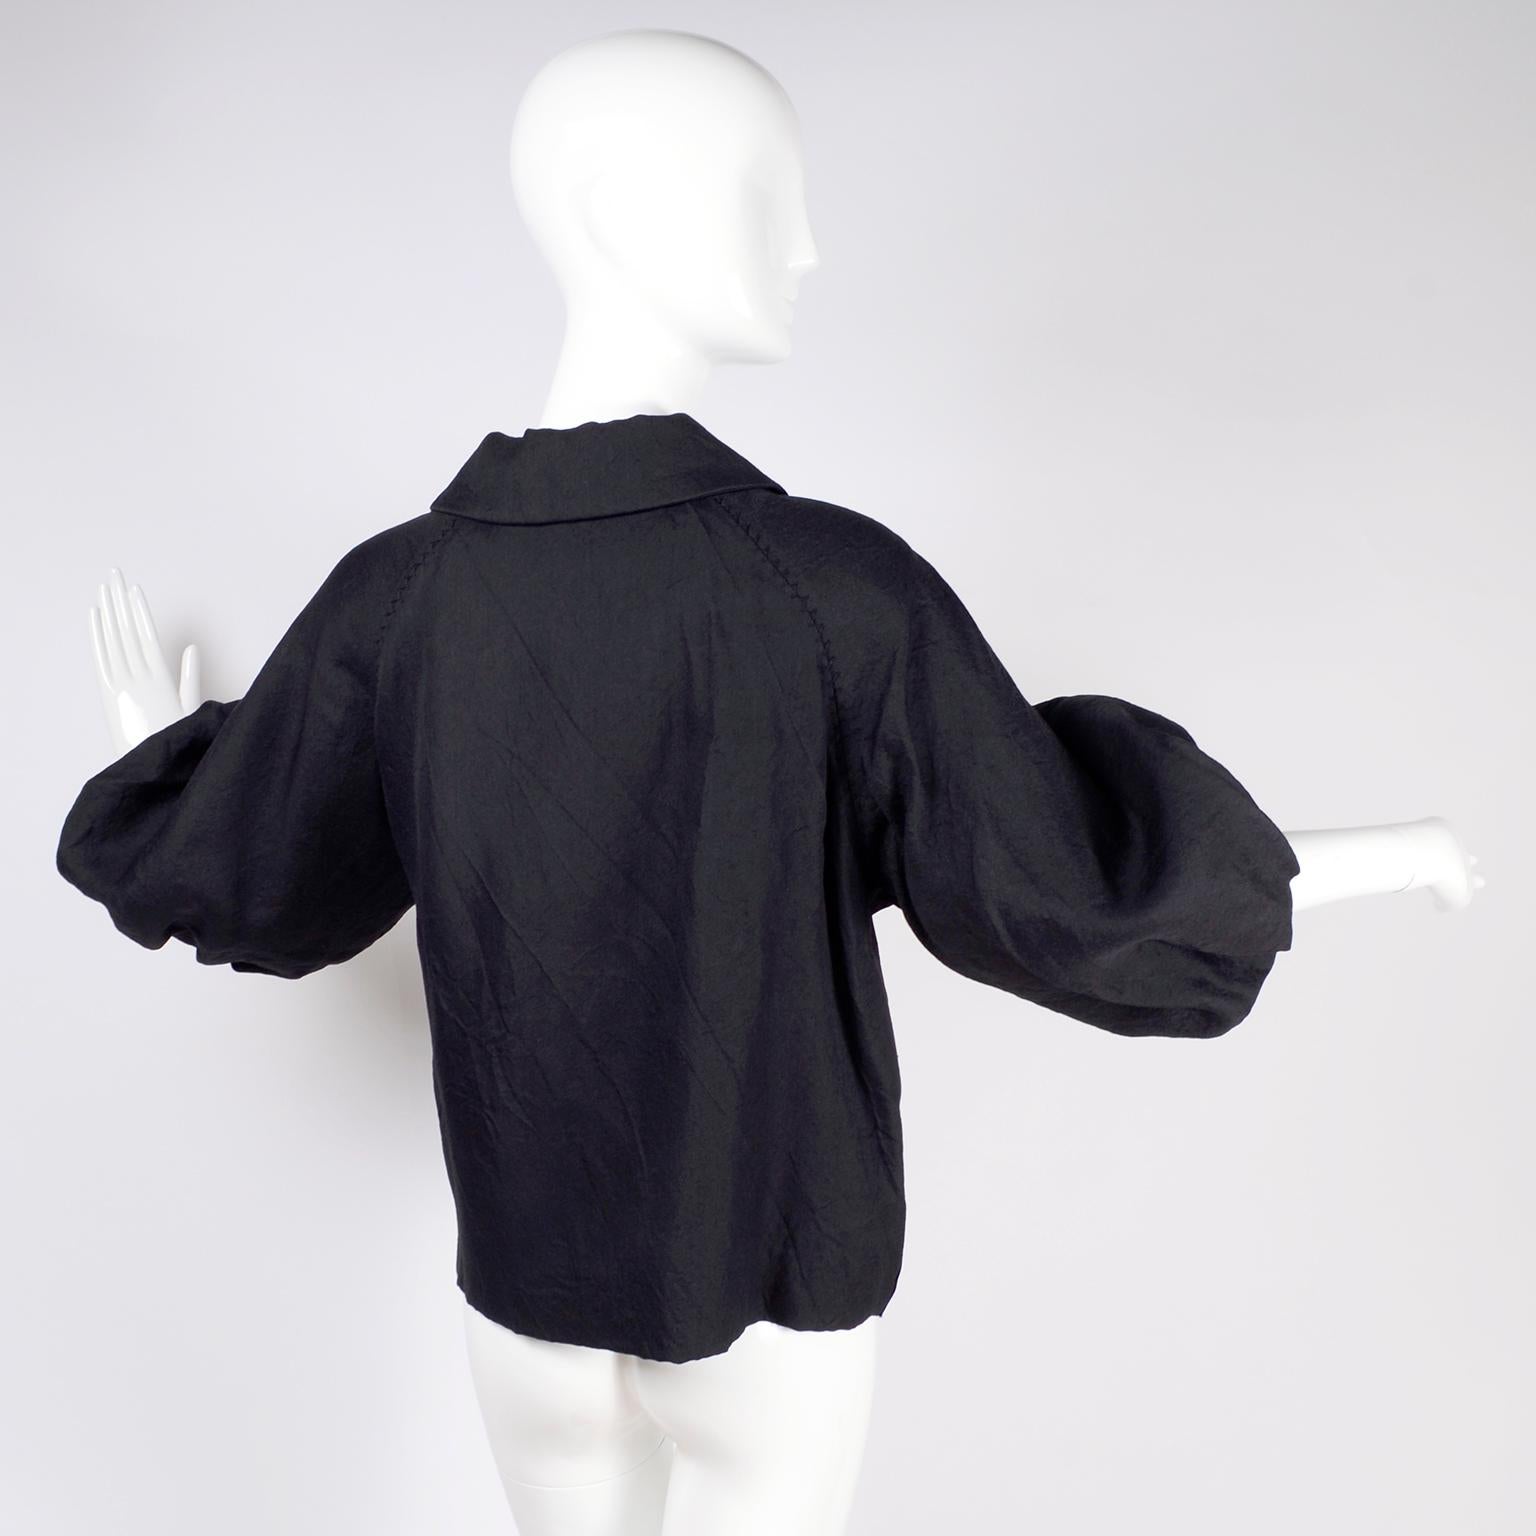 Alber Elbaz 2006 Lanvin Jacket / Top in Black Silk w/ Blouson Sleeves  5